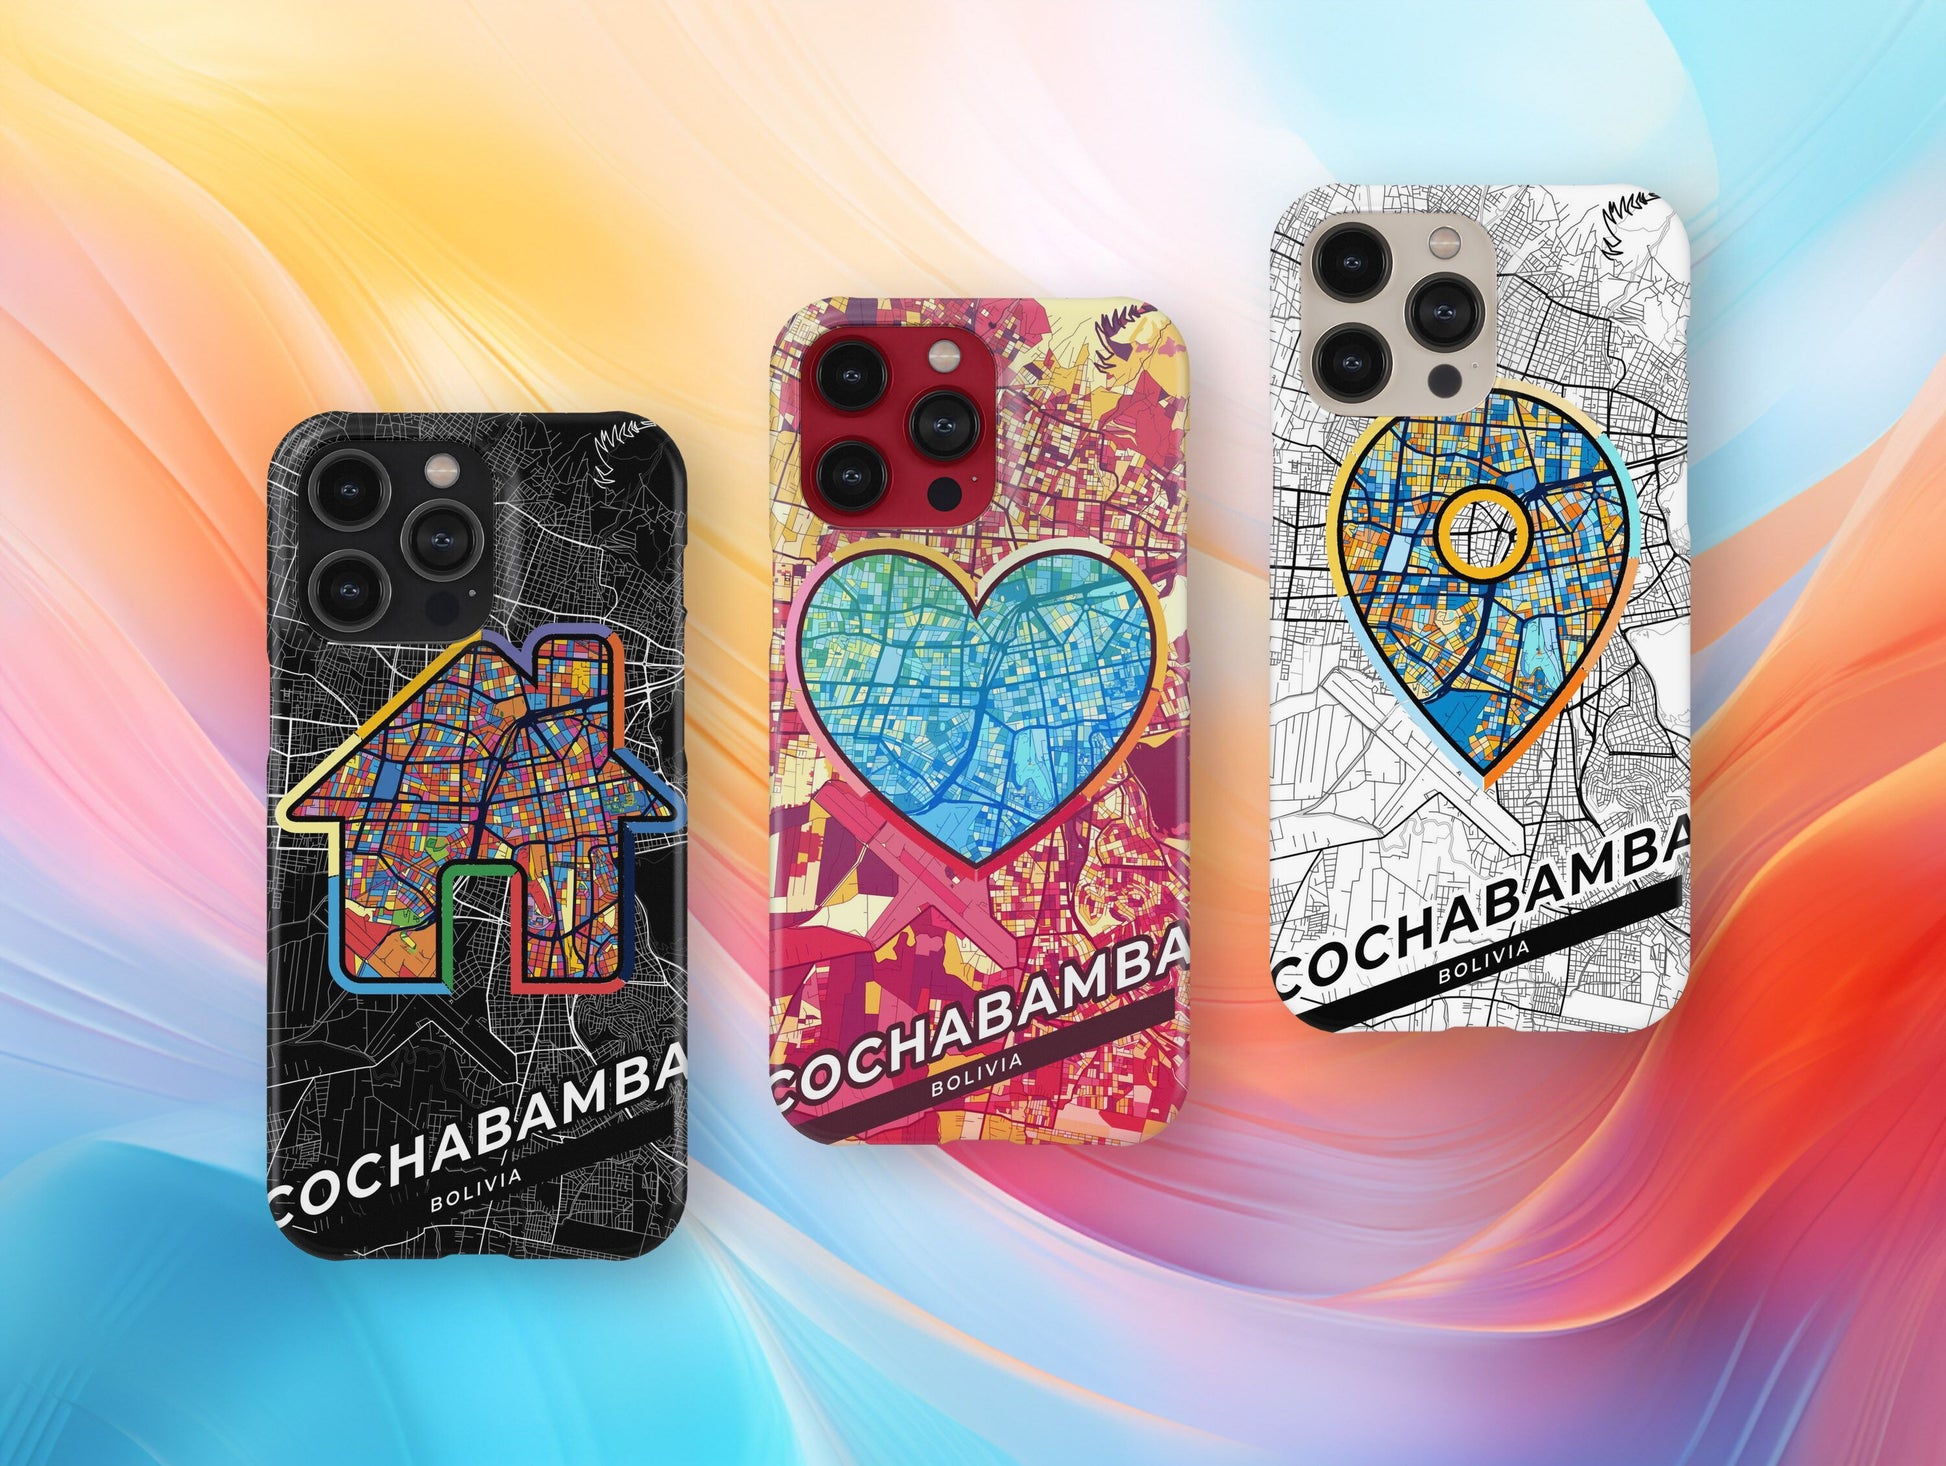 Cochabamba Bolivia slim phone case with colorful icon. Birthday, wedding or housewarming gift. Couple match cases.